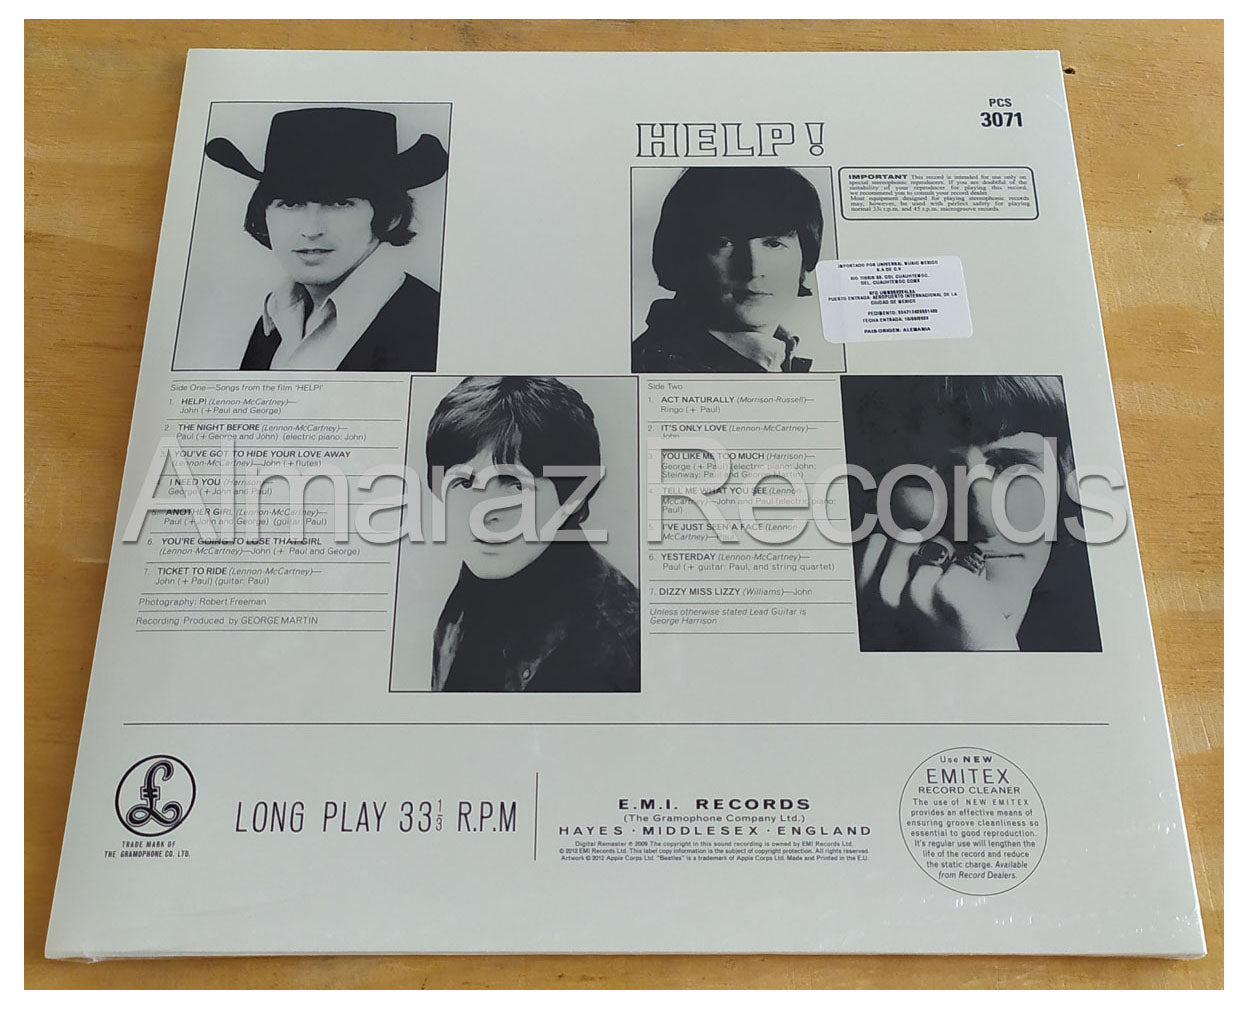 The Beatles Help! Vinyl LP